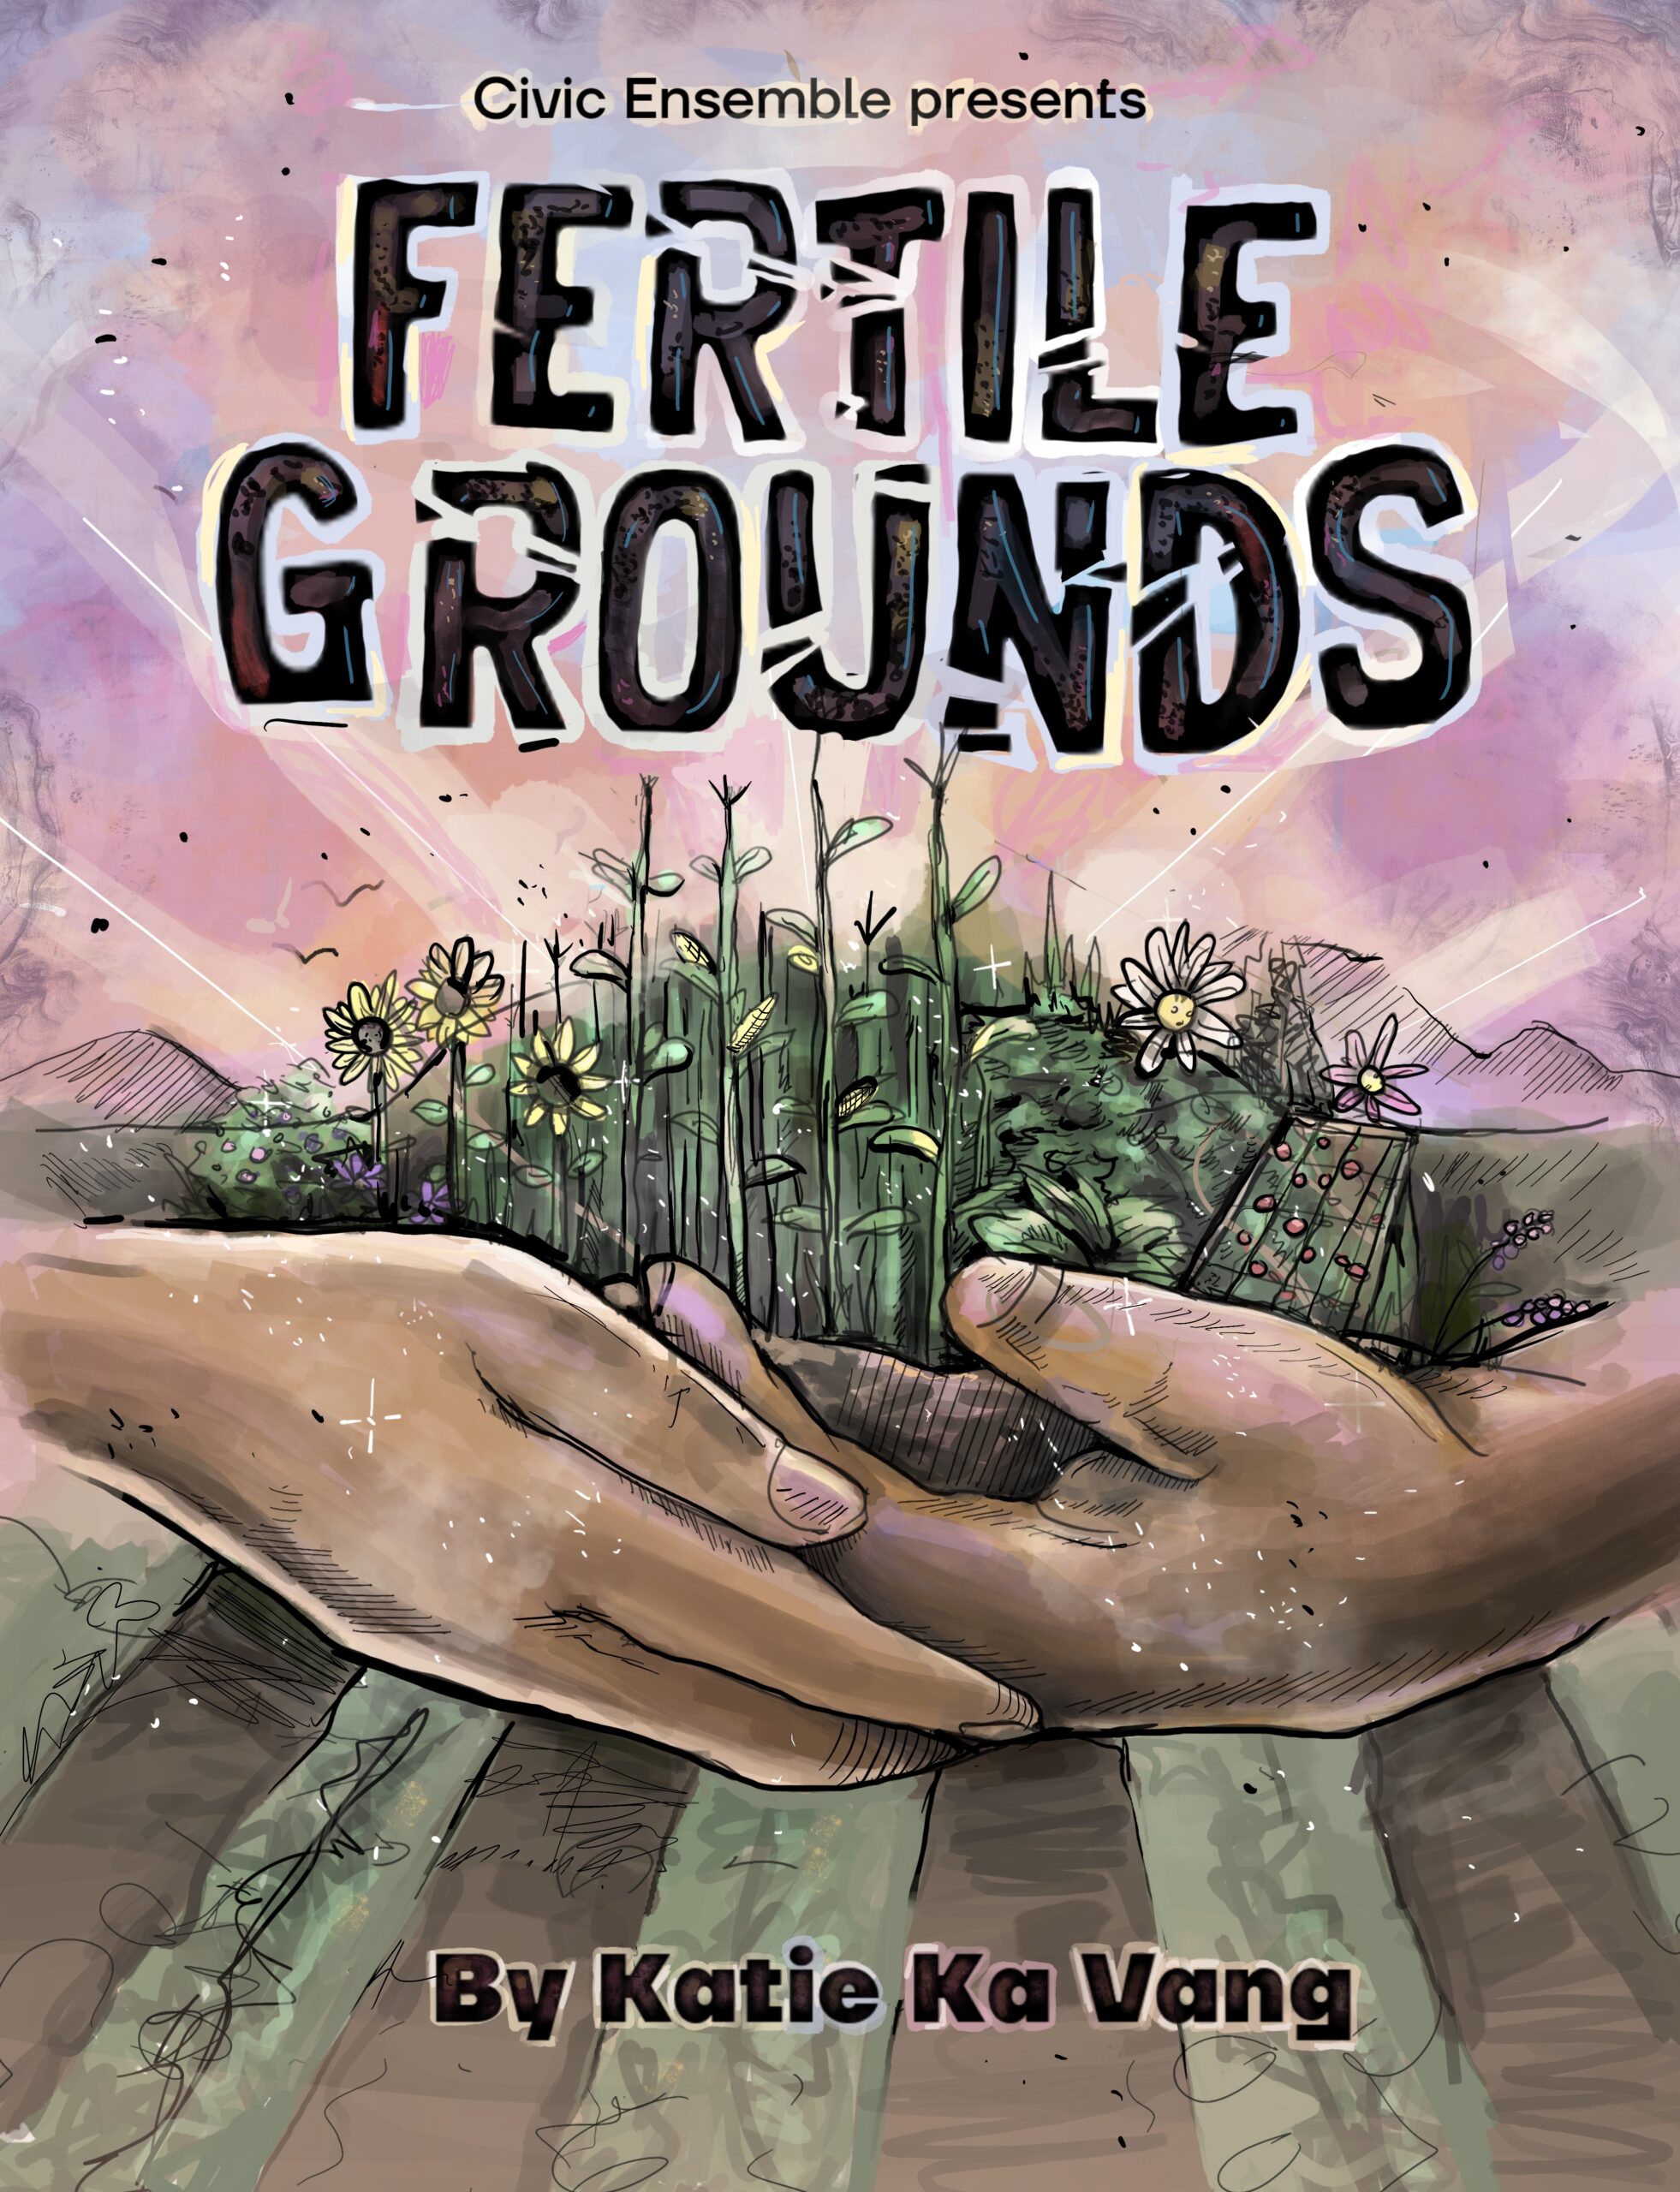 Civic Ensemble presents Fertile Grounds , a community-based play by Katie Ka Vang